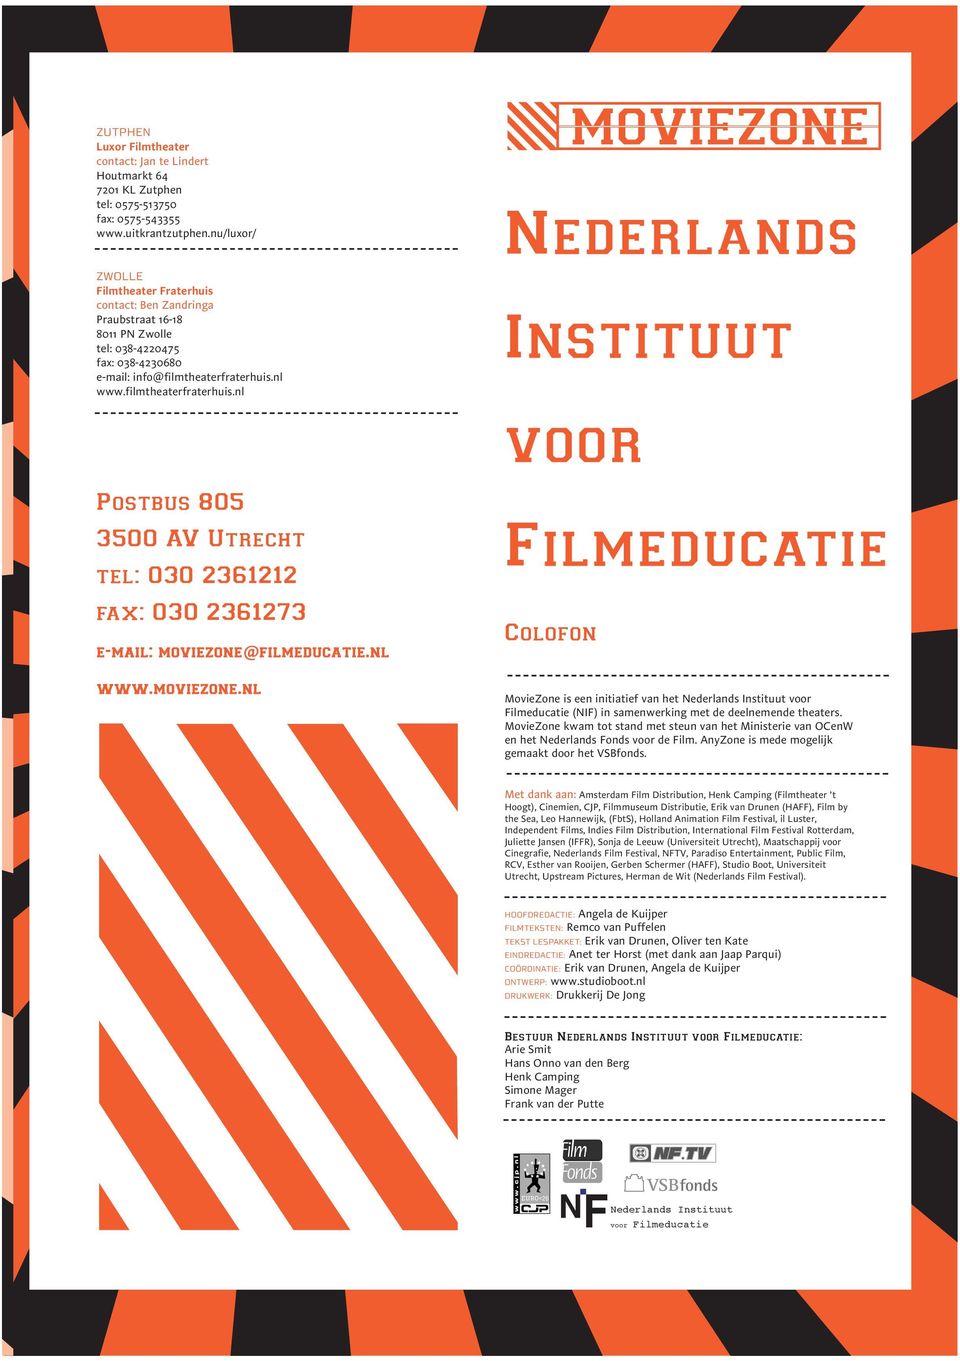 nl www.filmtheaterfraterhuis.nl Nederlands Instituut voor Postbus 805 3500 AV Utrecht tel: 030 2361212 fax: 030 2361273 e-mail: moviezone@